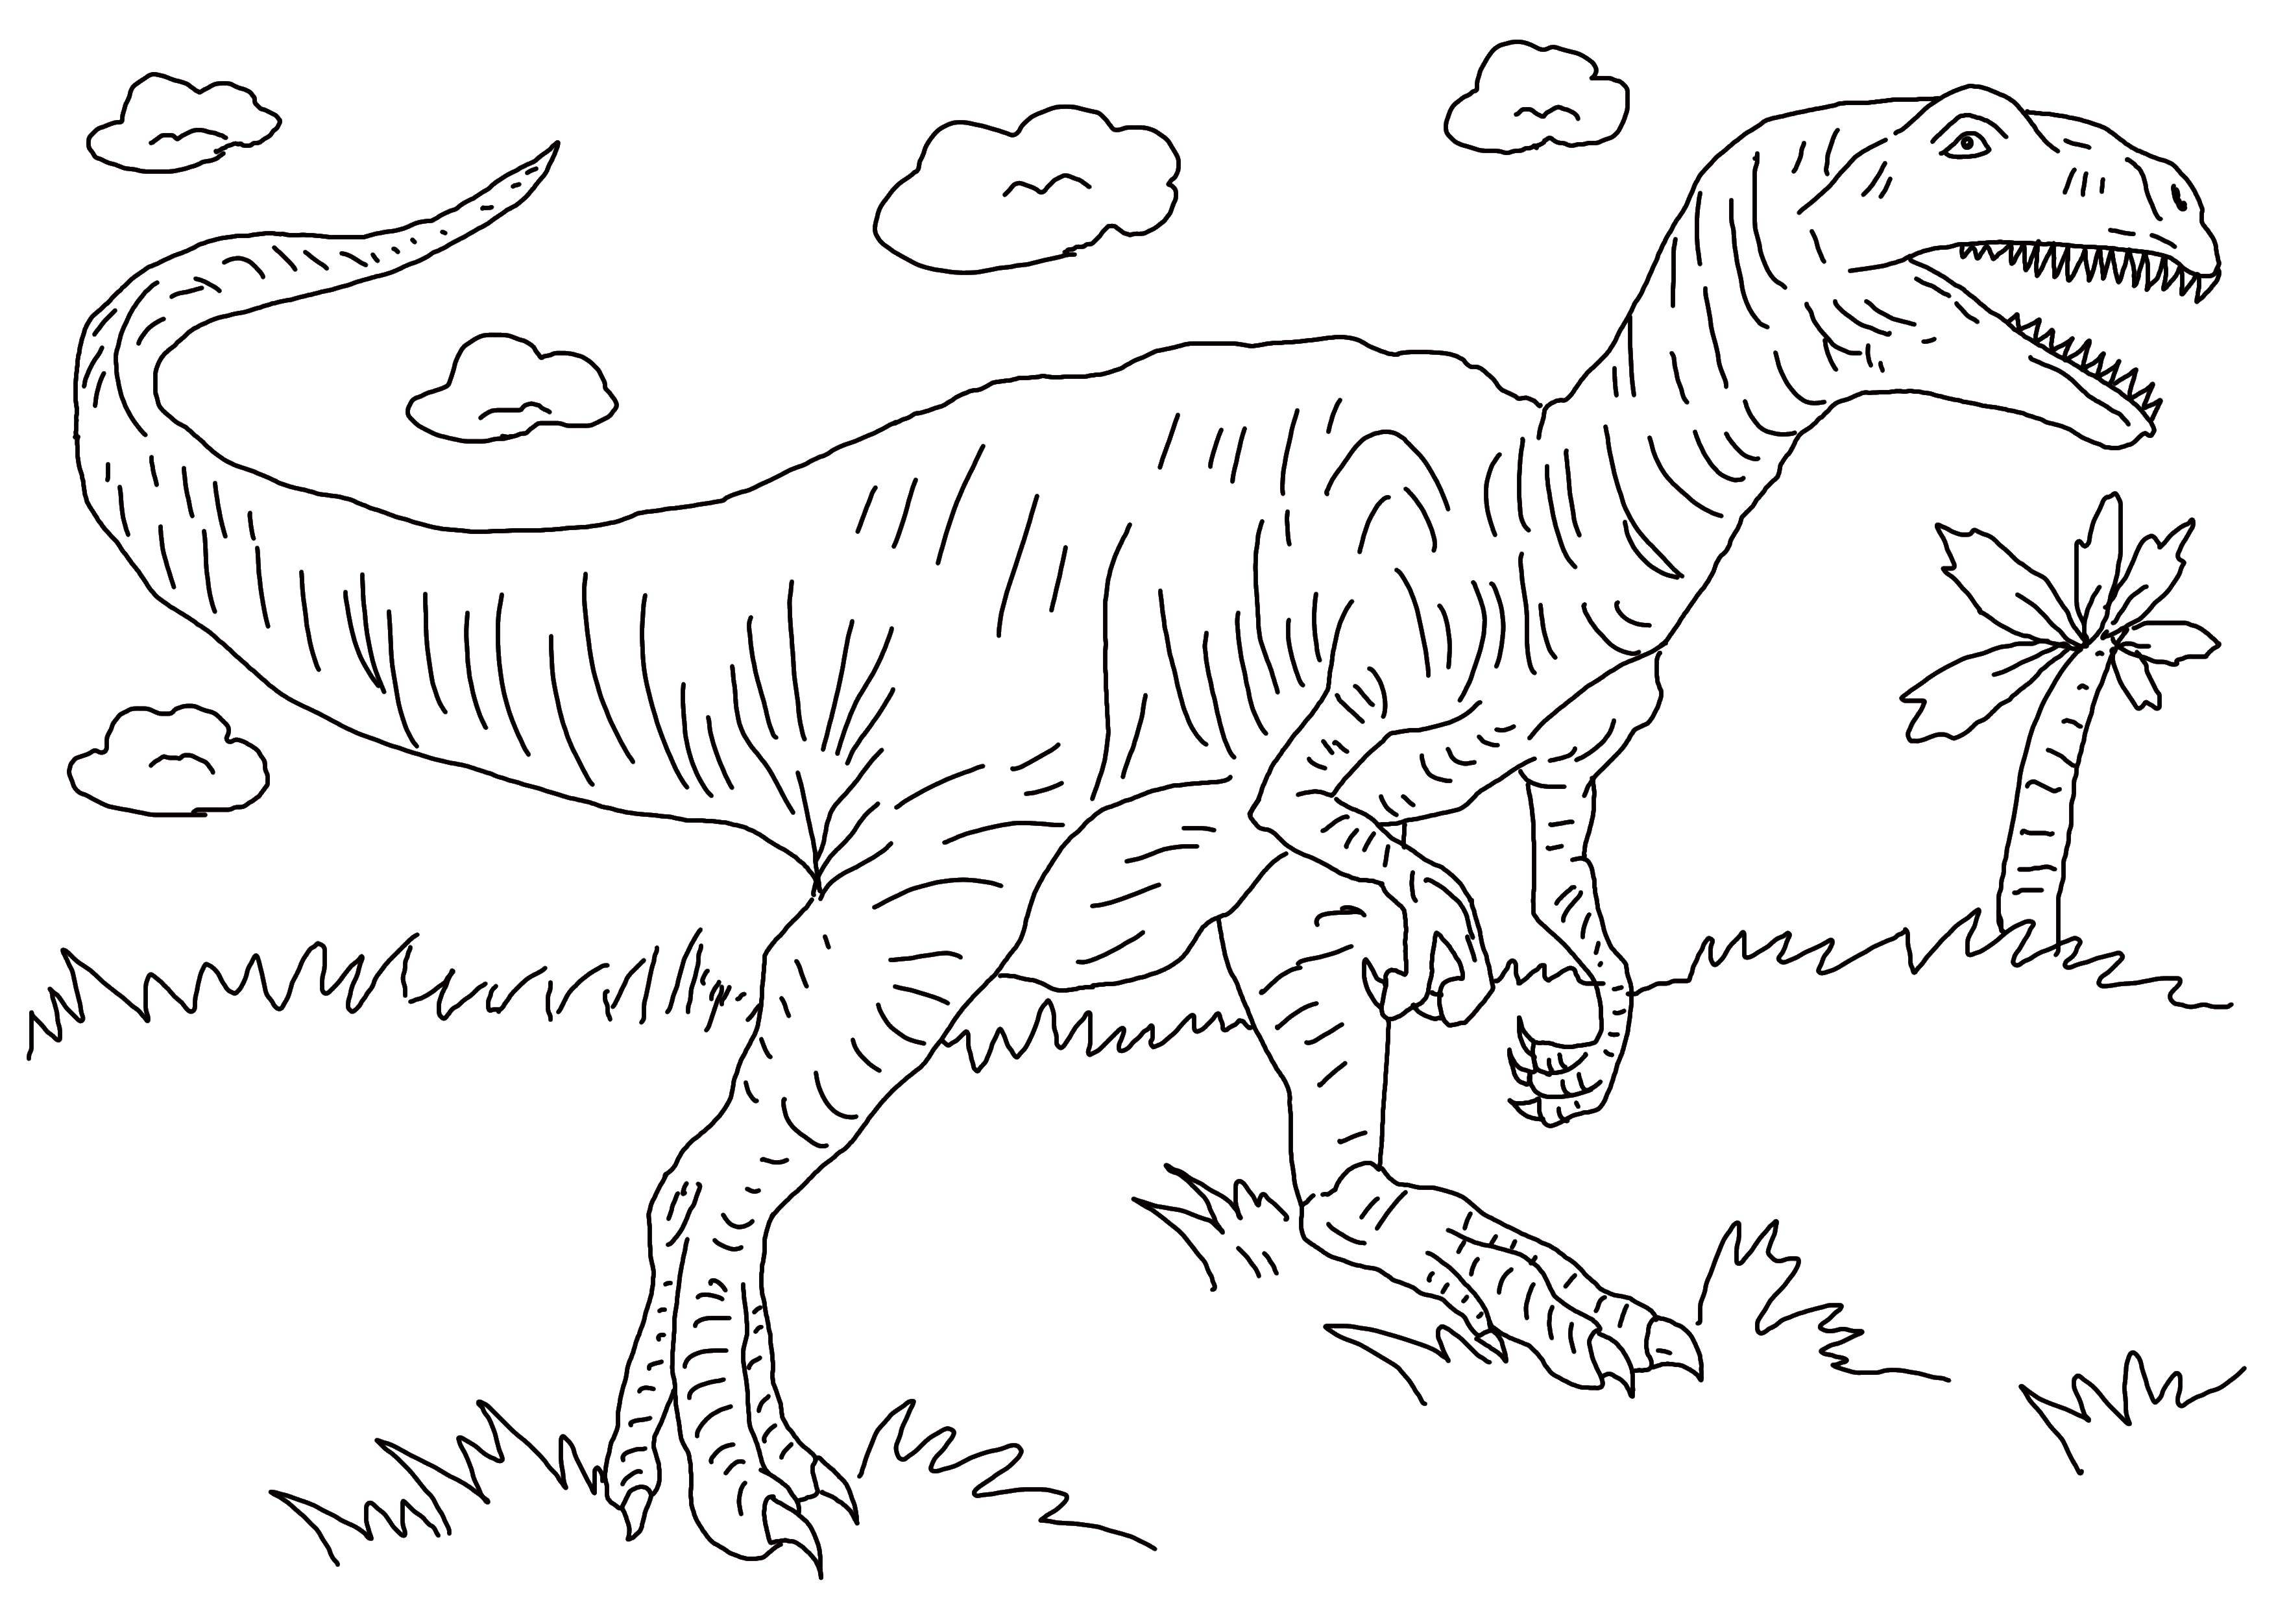 Coloring The dinosaur on the grass. Category dinosaur. Tags:  dinosaur, grass, tail.